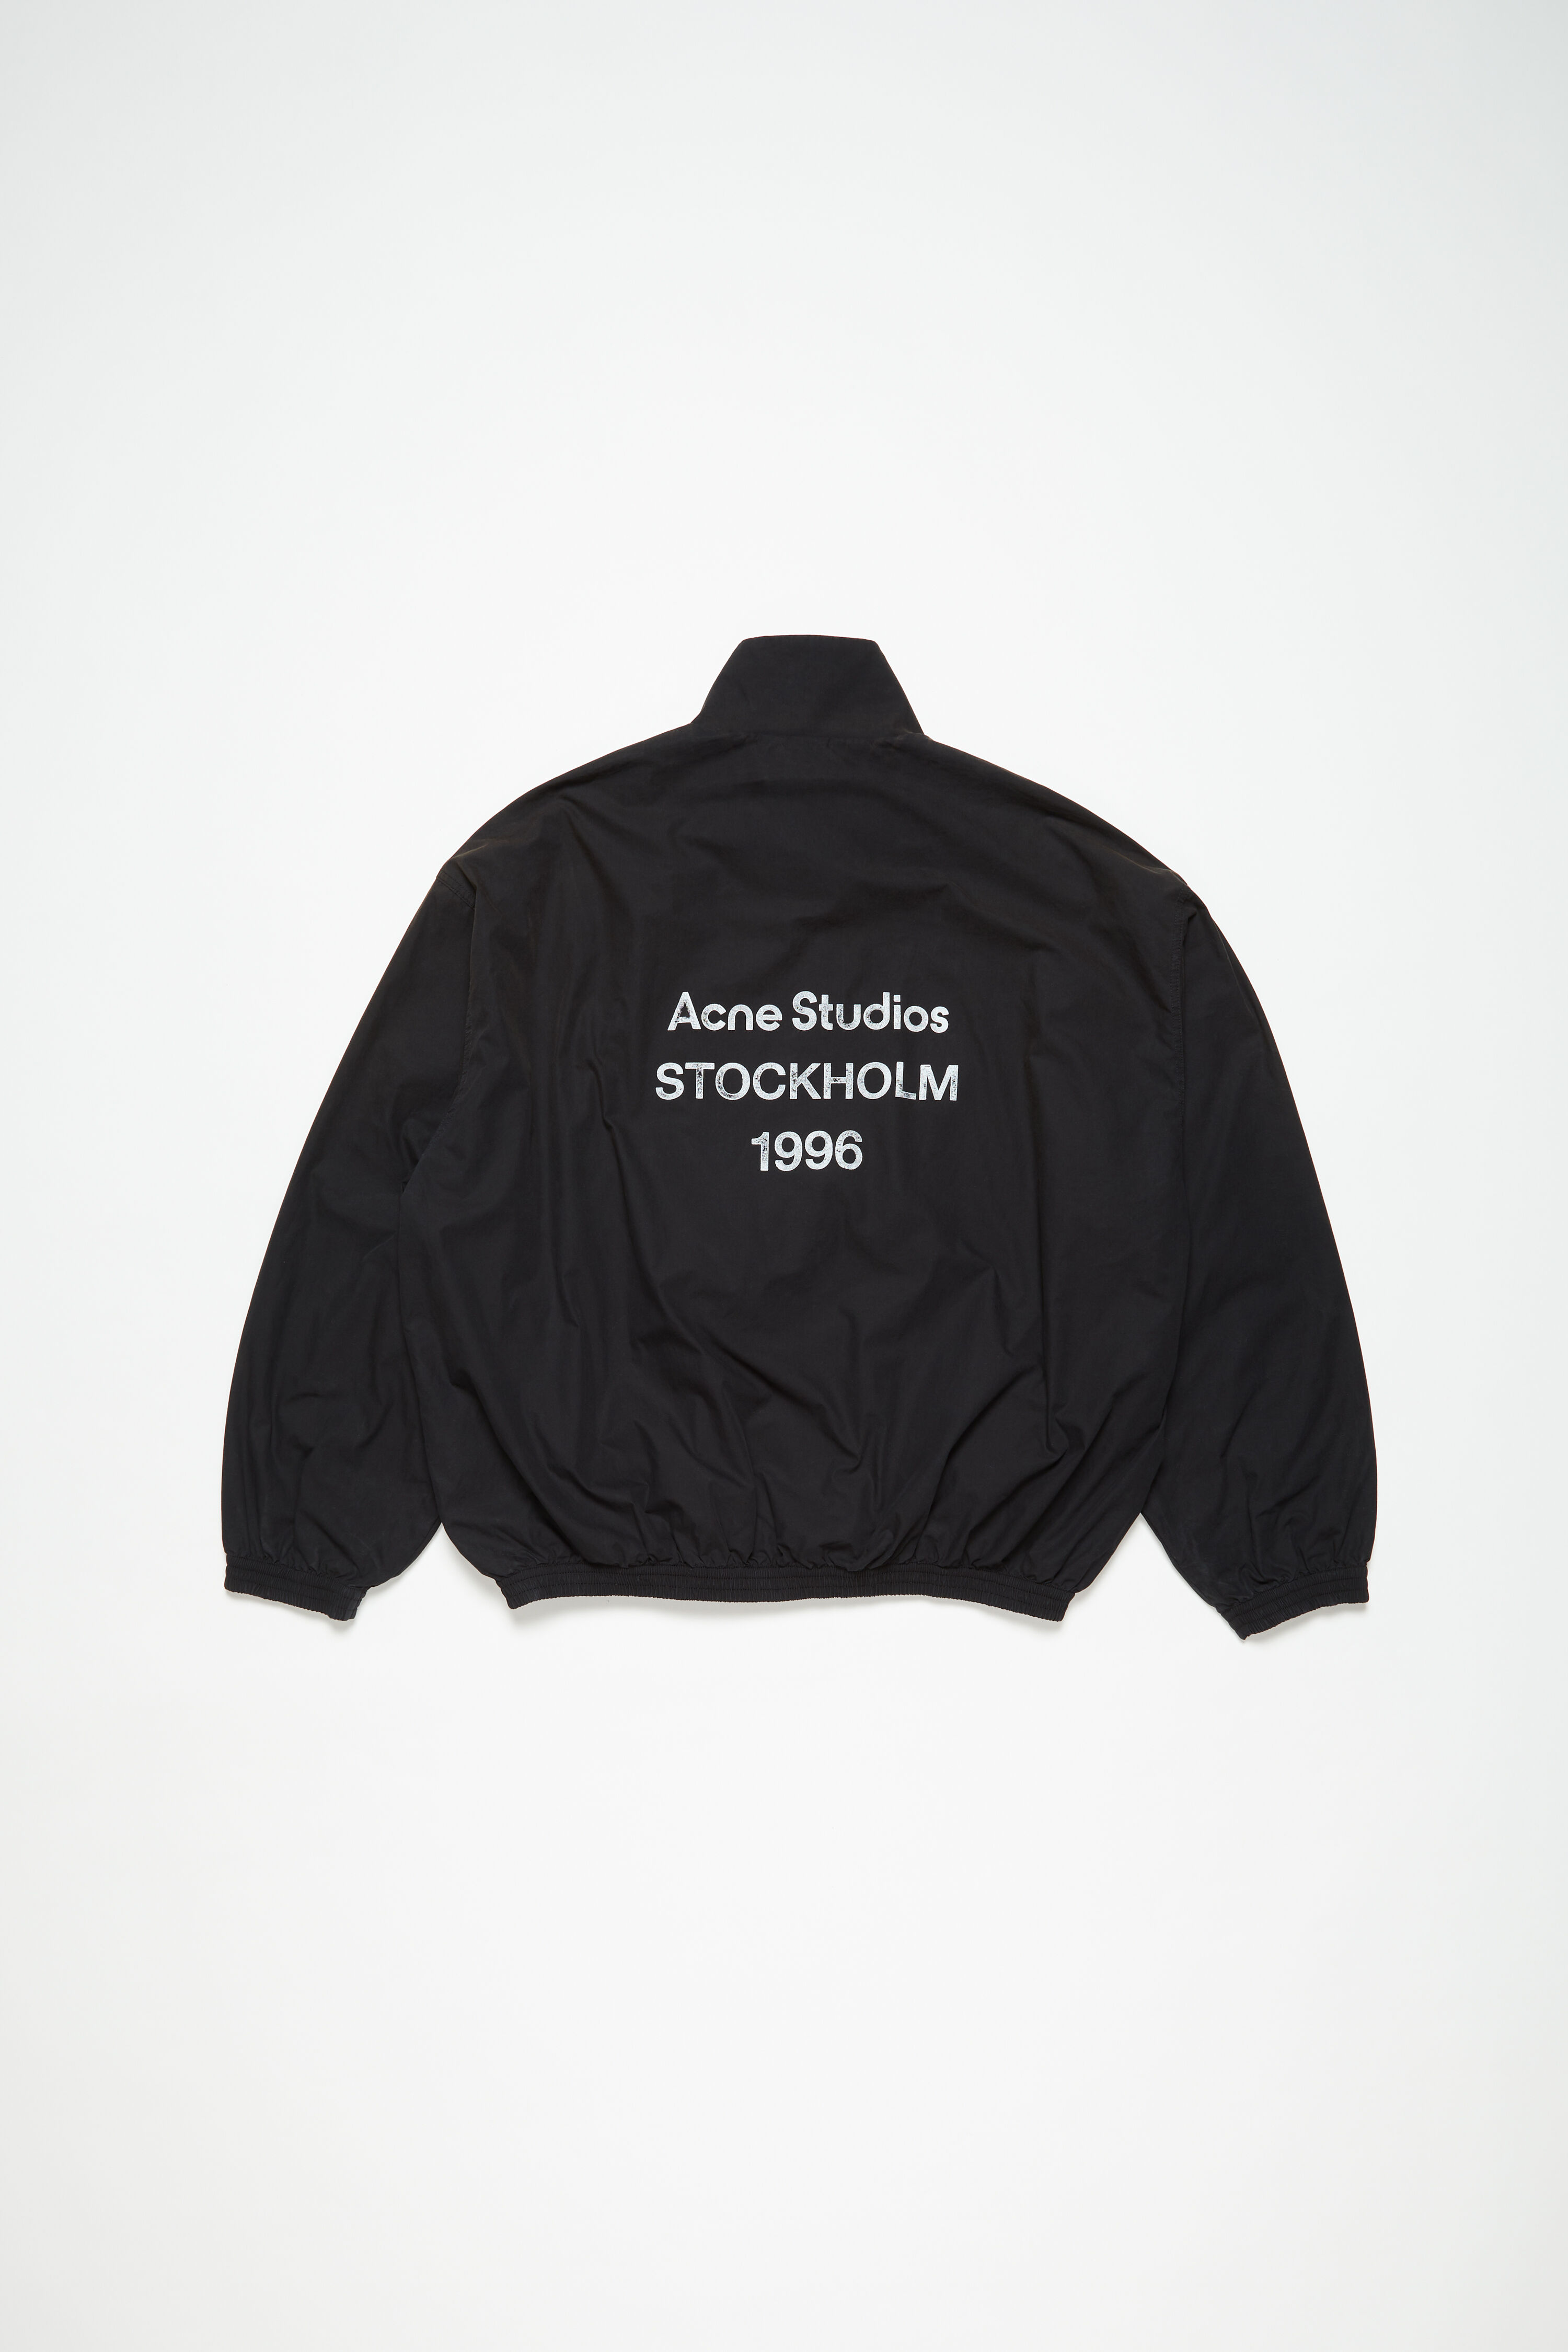 Acne Studios Logo Zipper Jacket Black - ジャケット・アウター